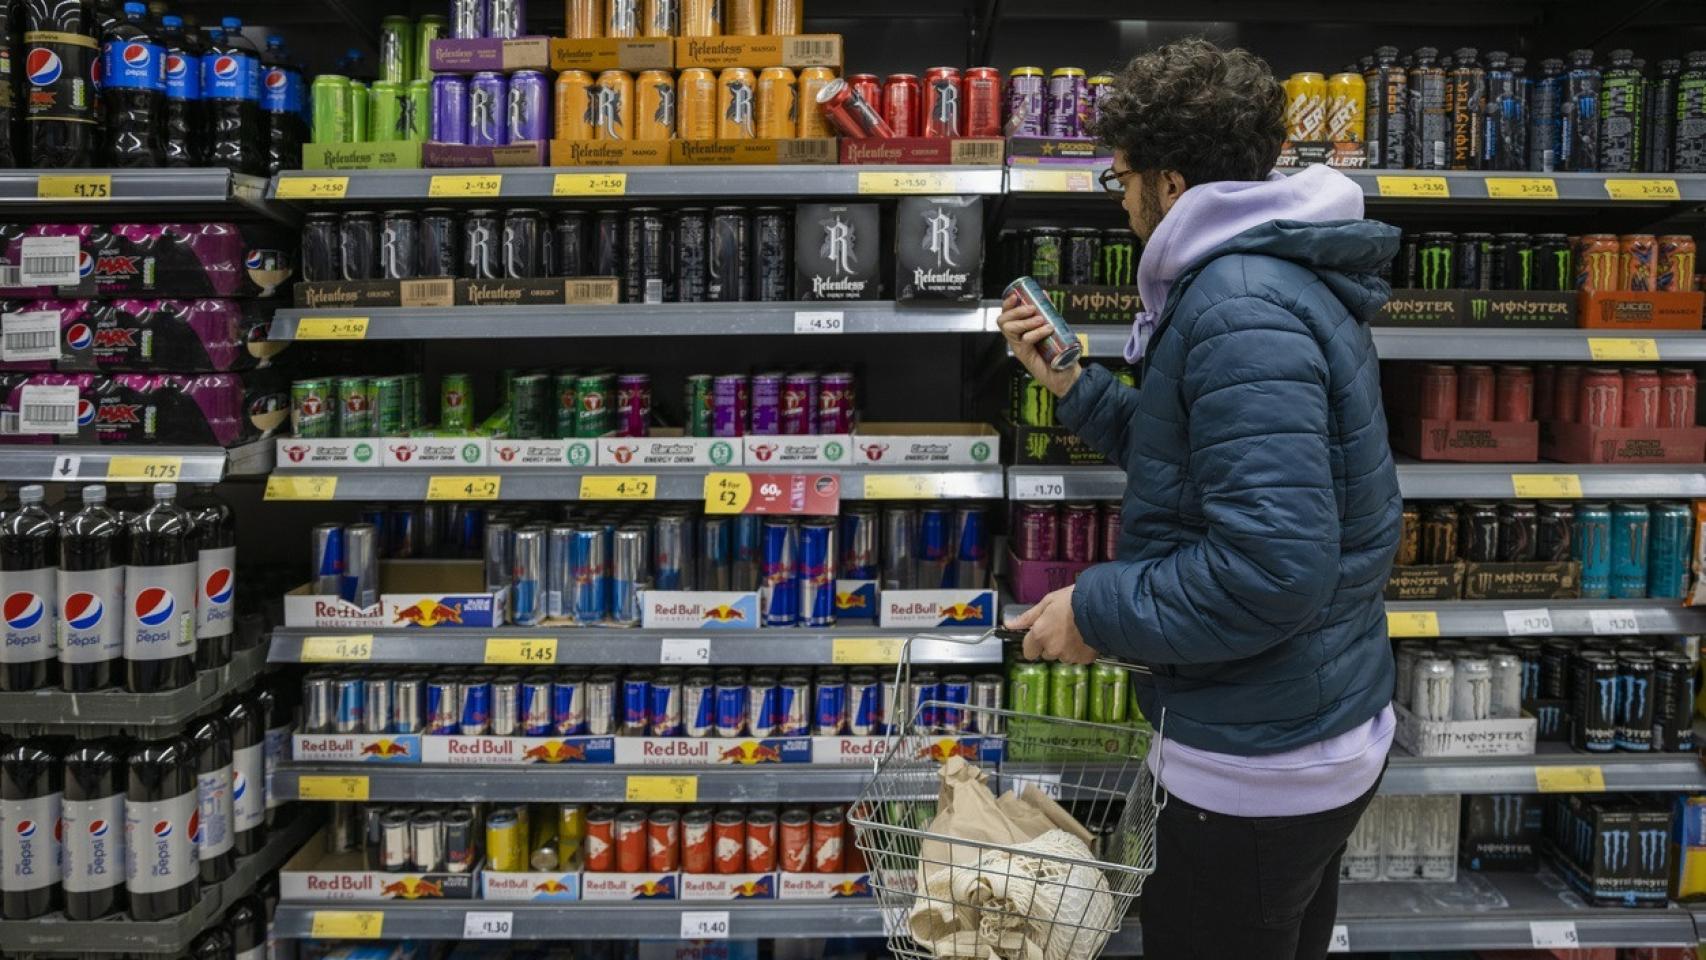 Estanterías en un supermercado con bebidas energéticas.